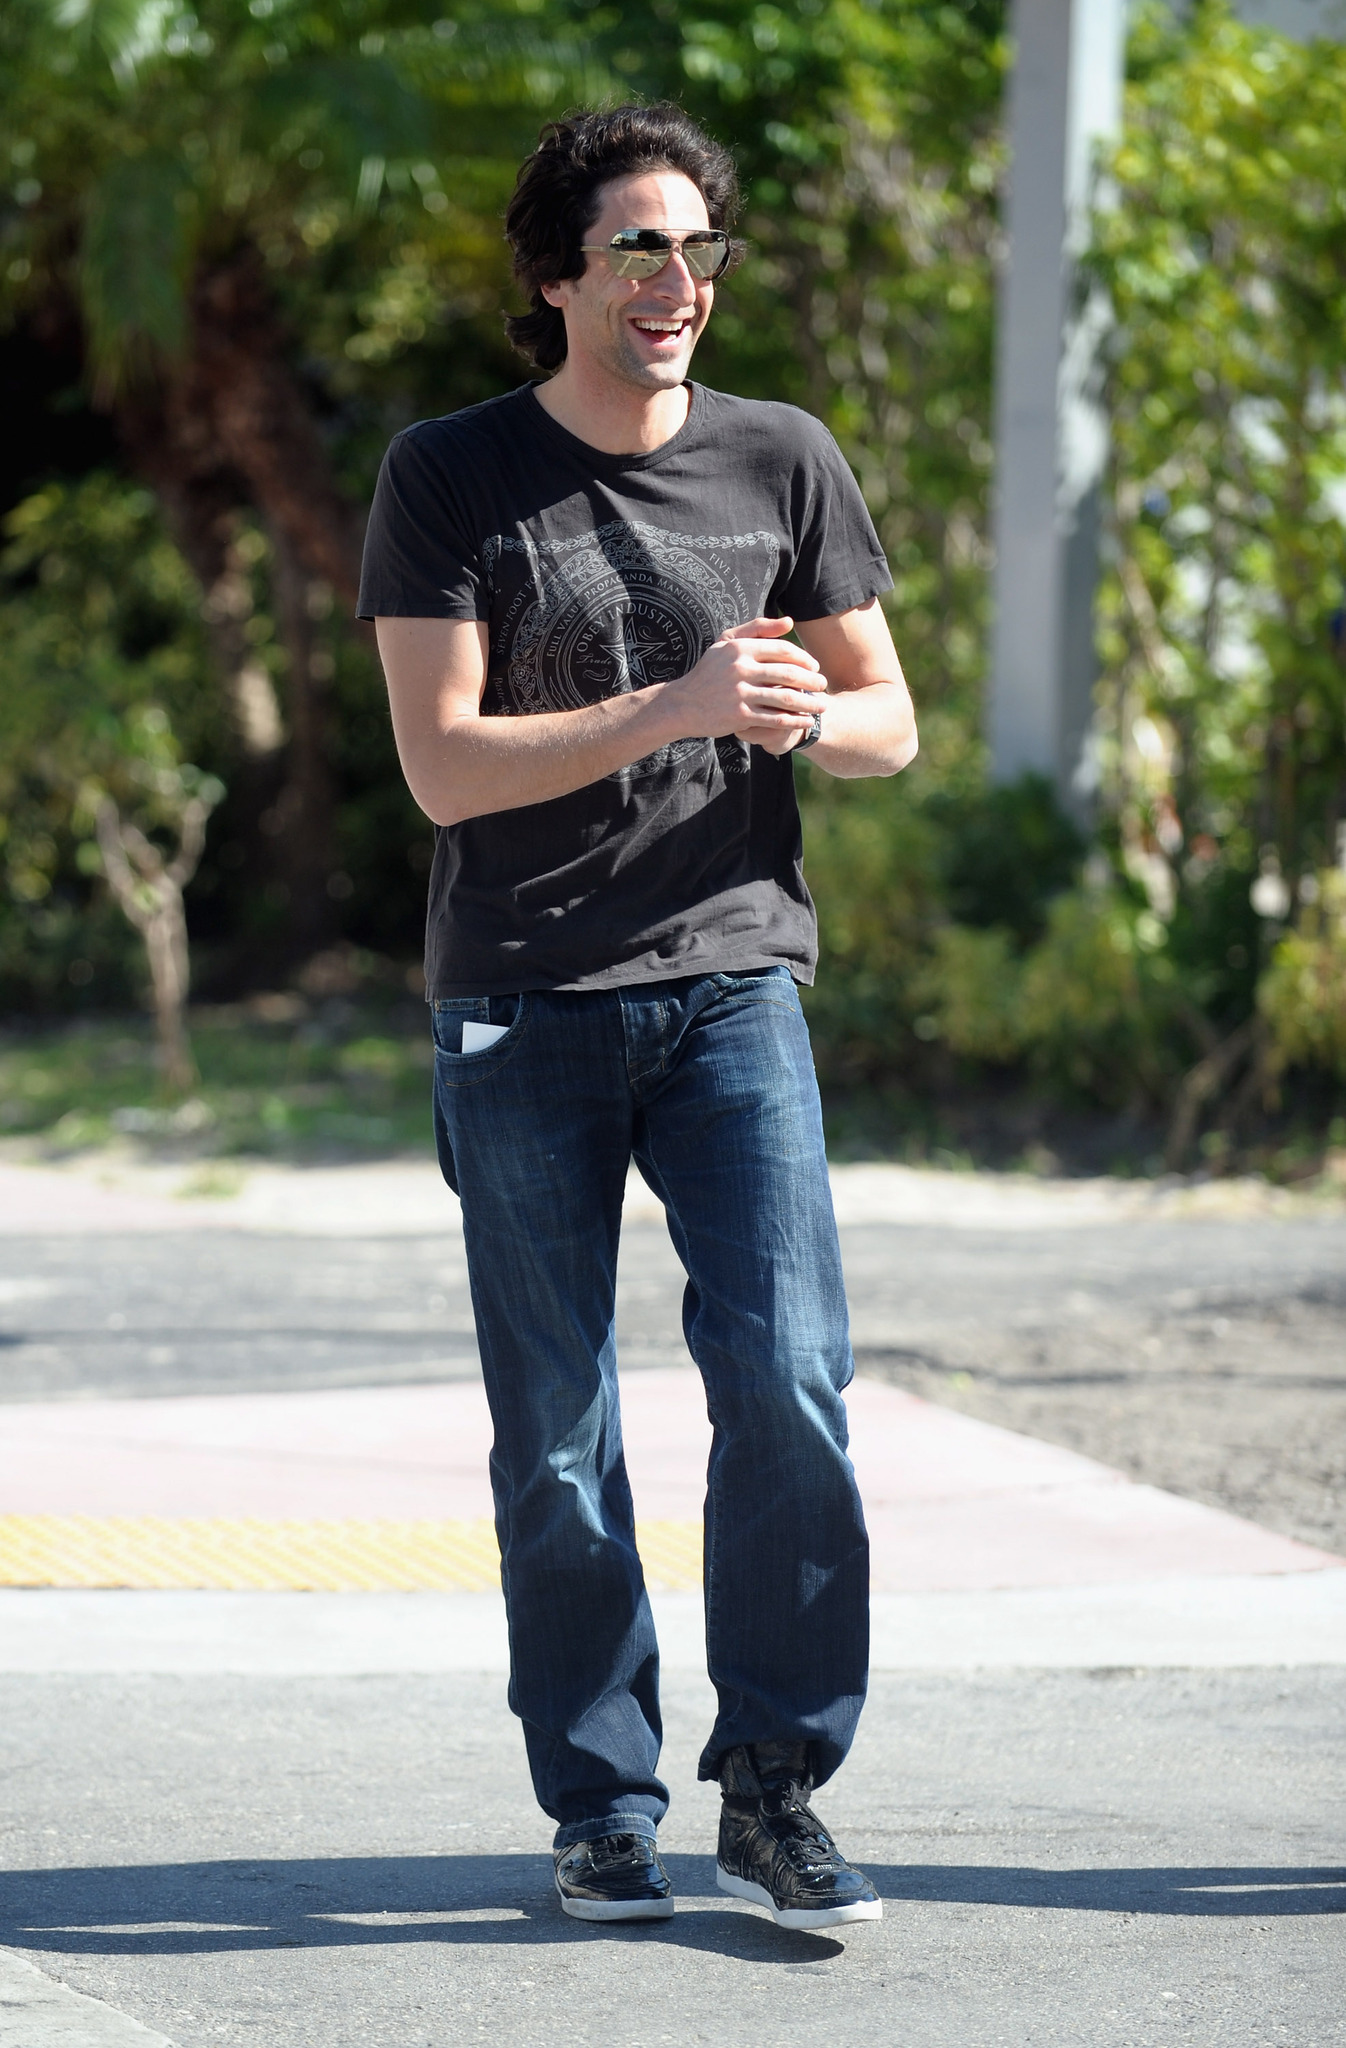 Adrien Brody